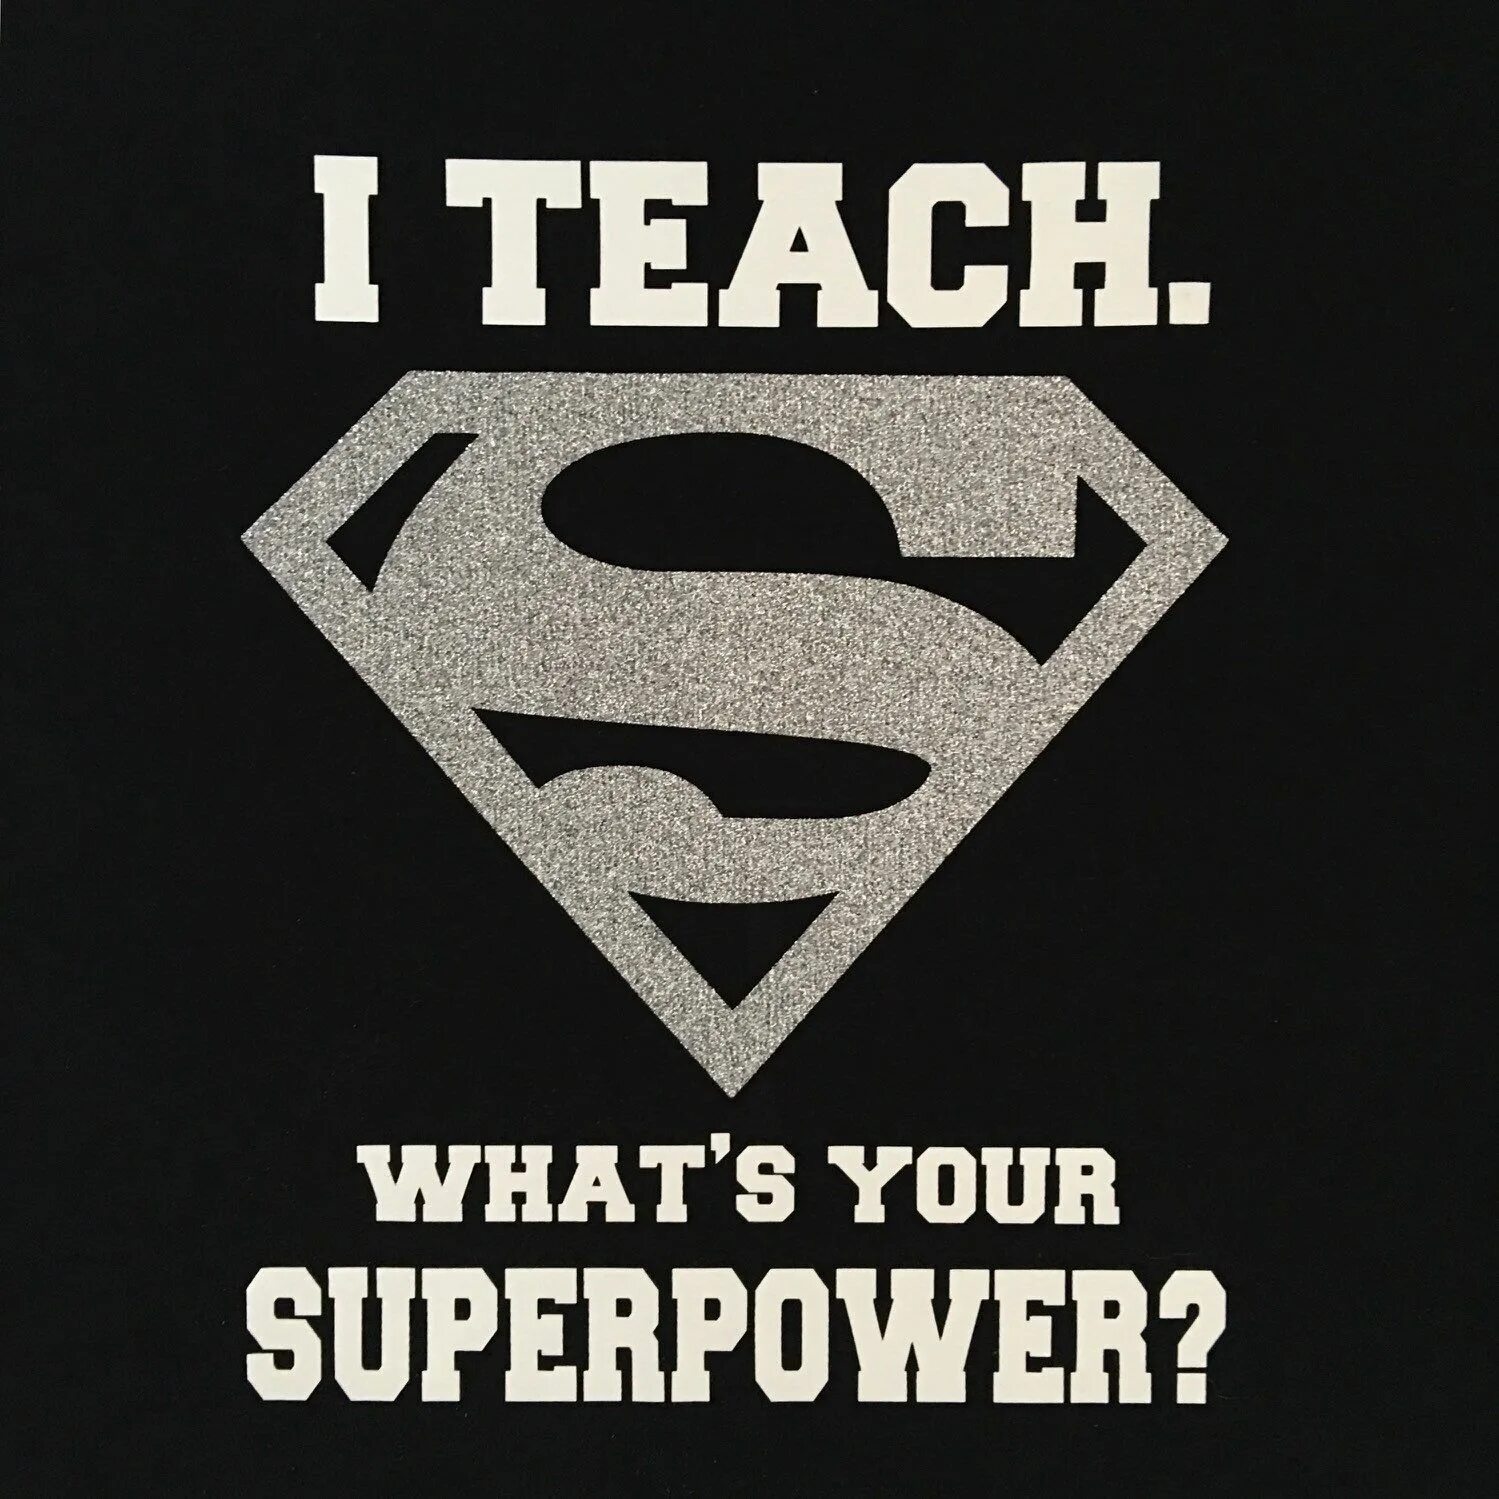 Teachers powers. I am teacher what is your Superpower. I am a teacher what's your Superpower. Teacher Superpower. Татуировка i teach what's your Superpower.